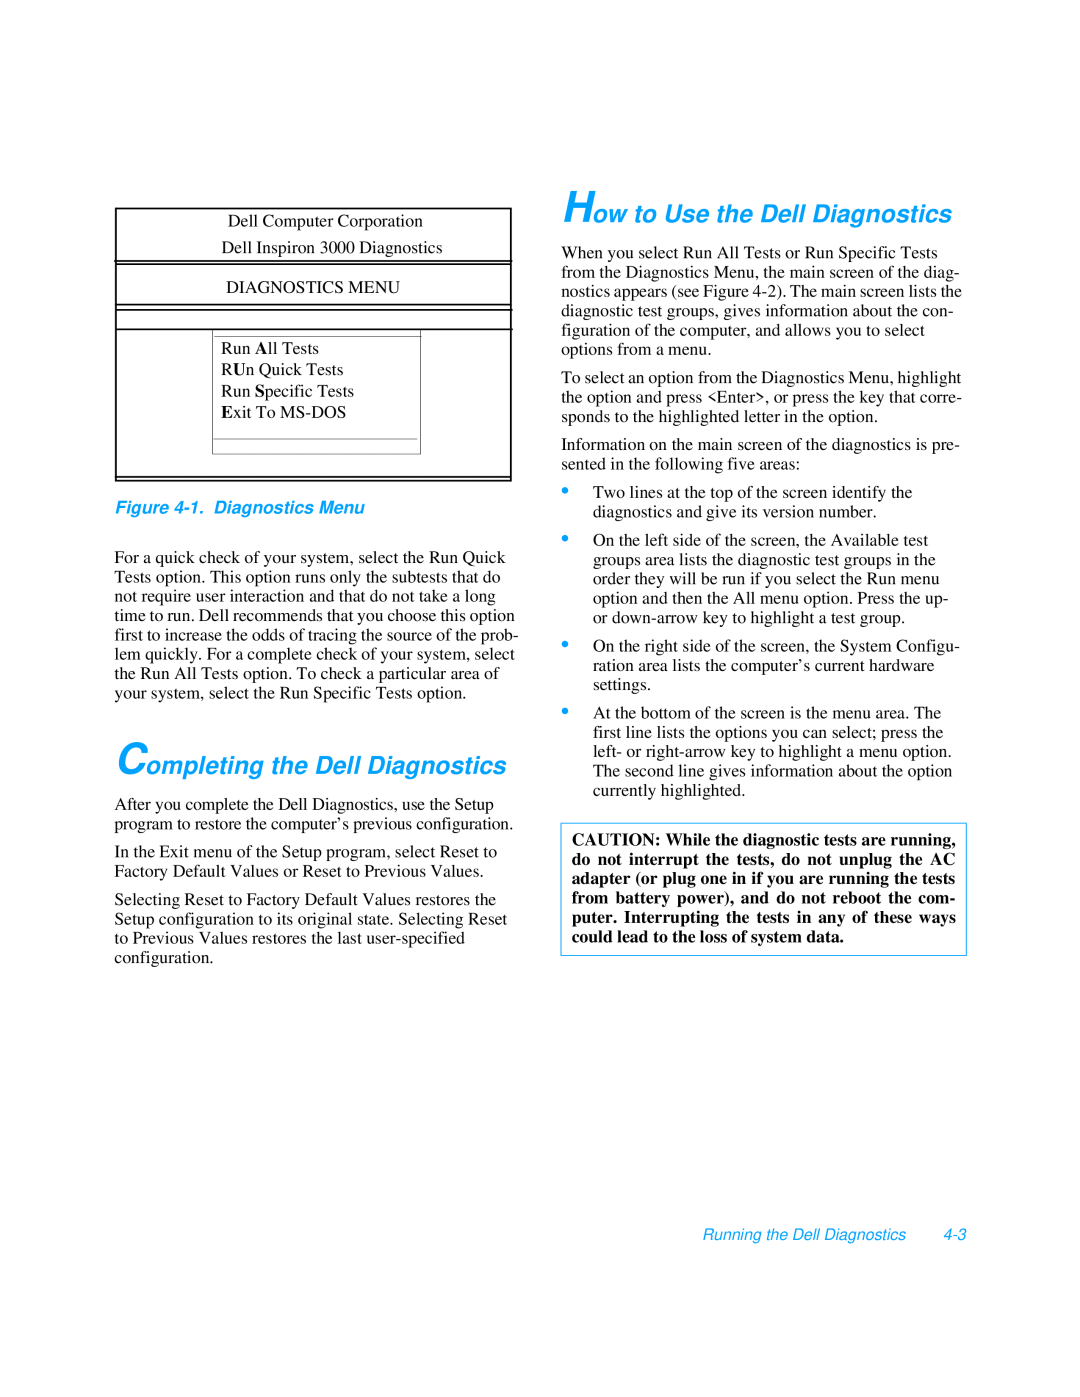 Dell 3000 manual Completing the Dell Diagnostics, How to Use the Dell Diagnostics, 1. Diagnostics Menu 